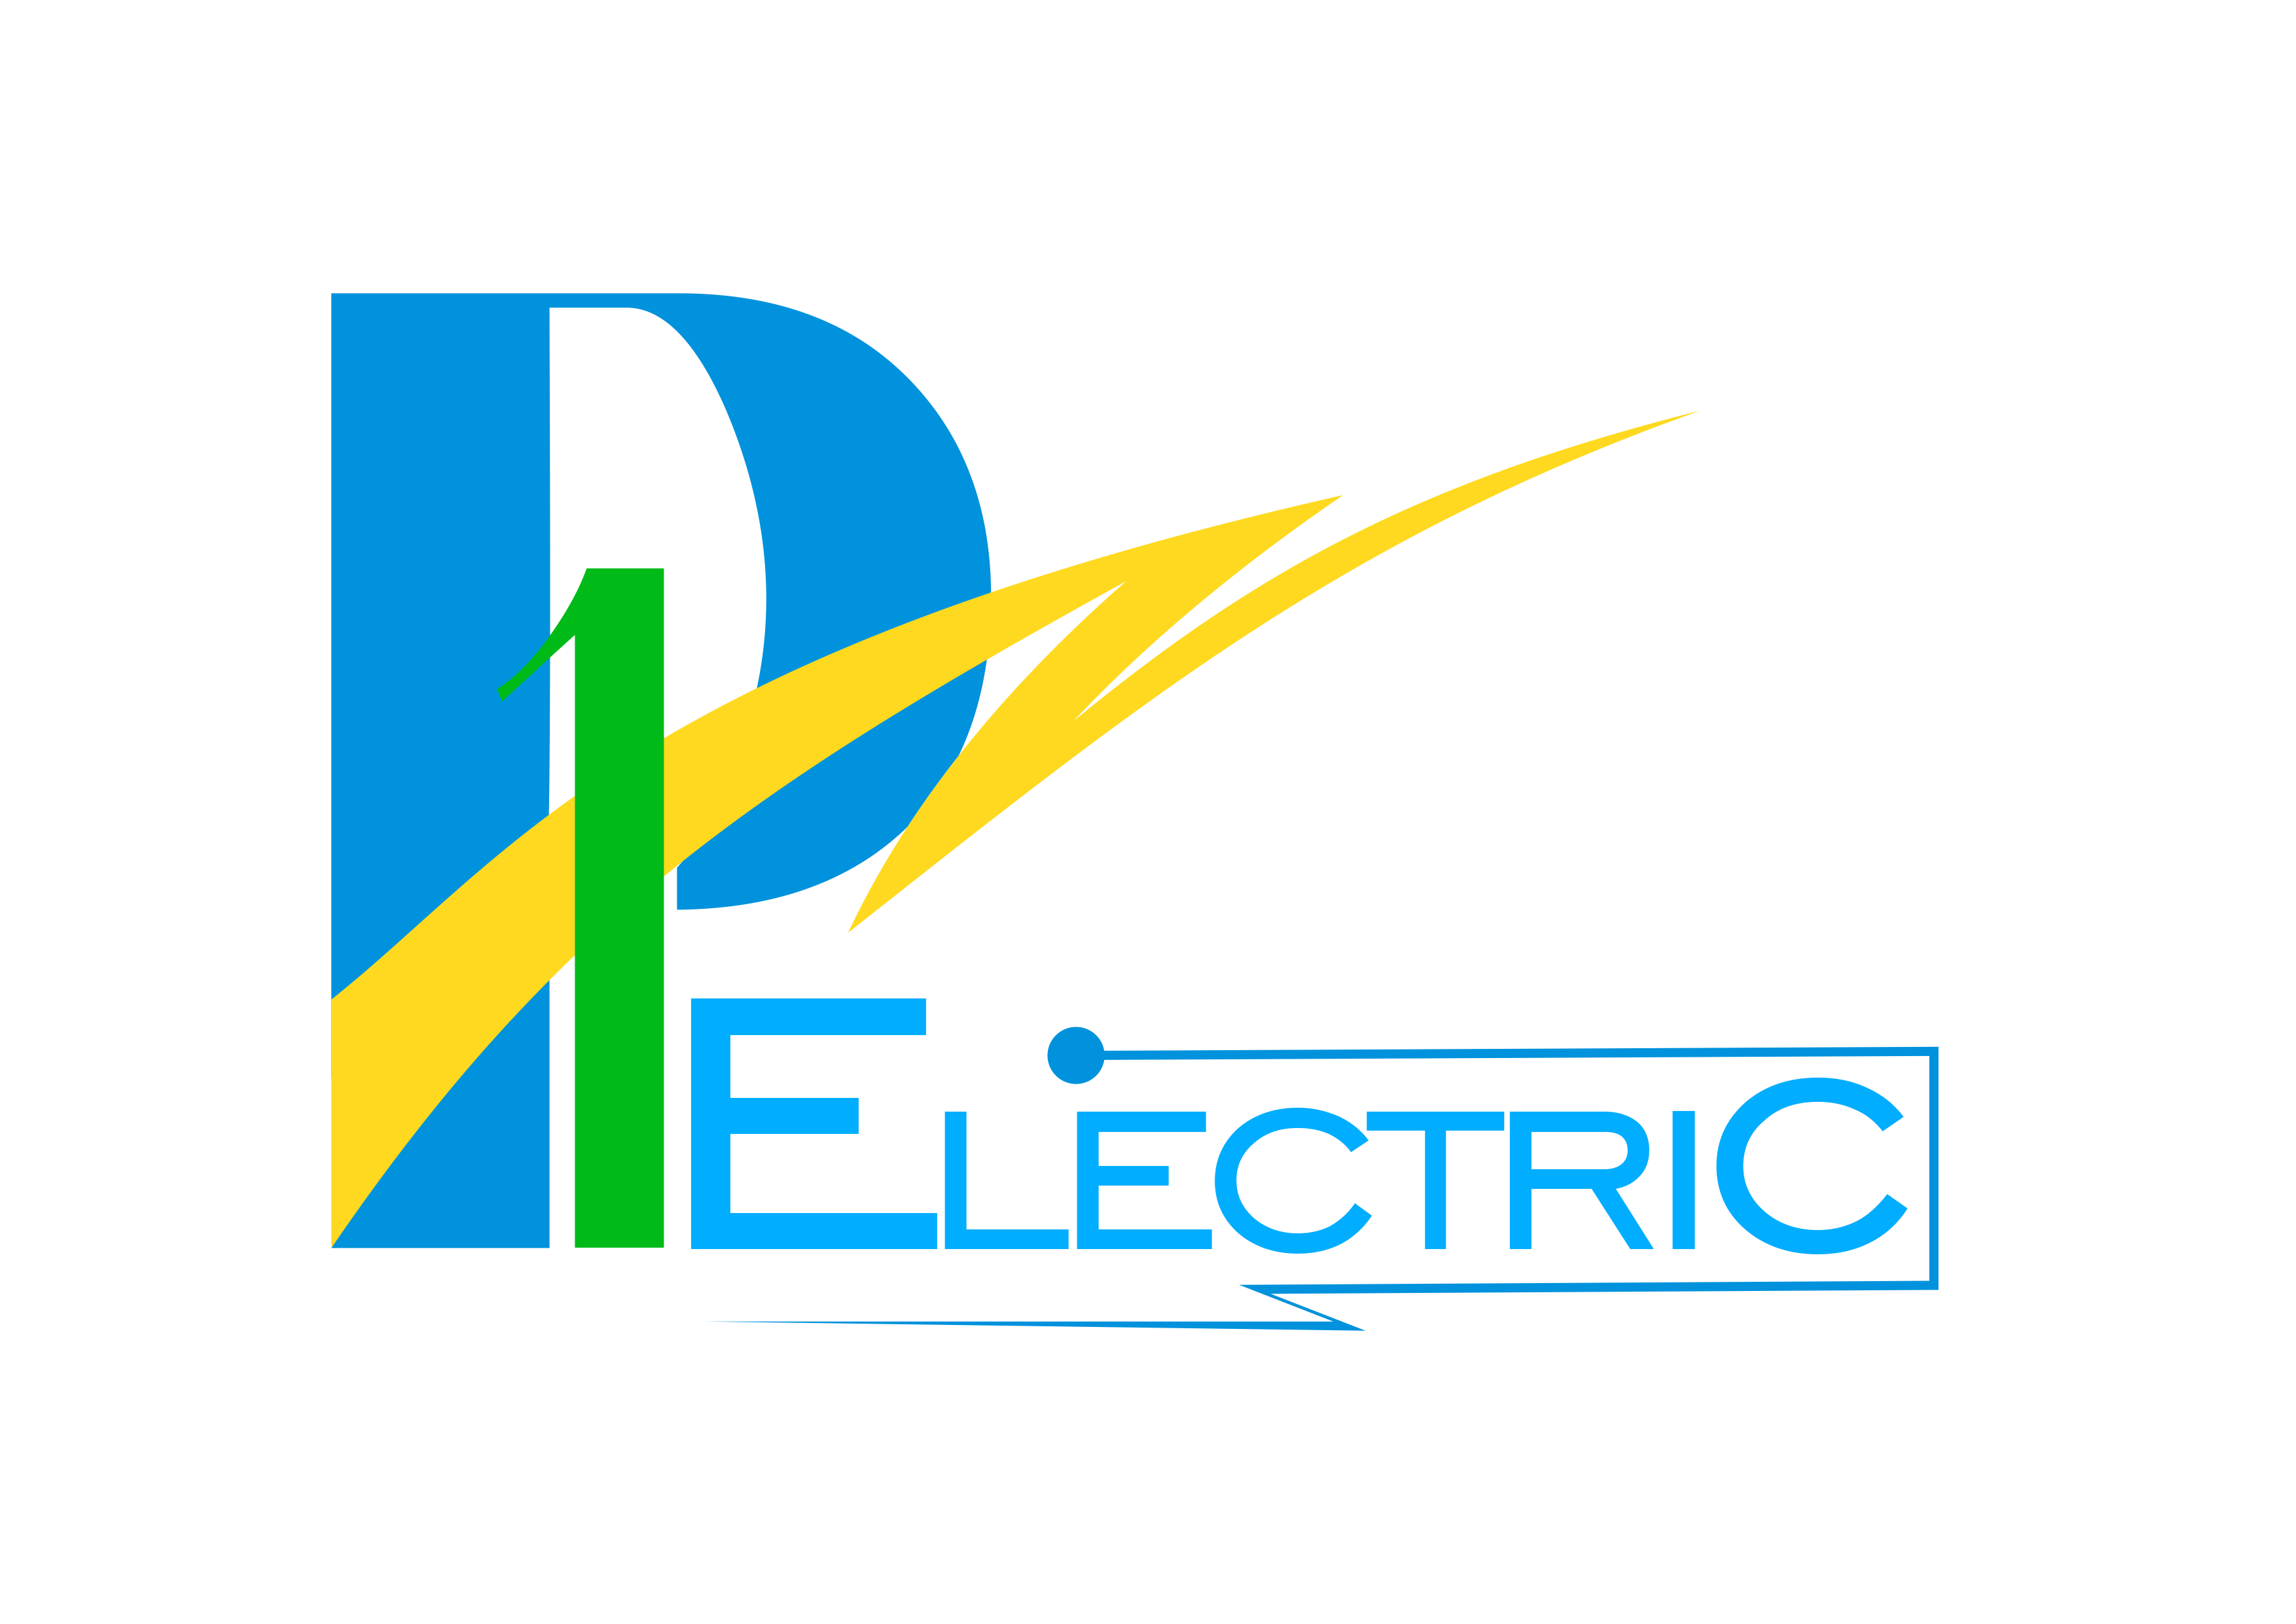 P1 Electric